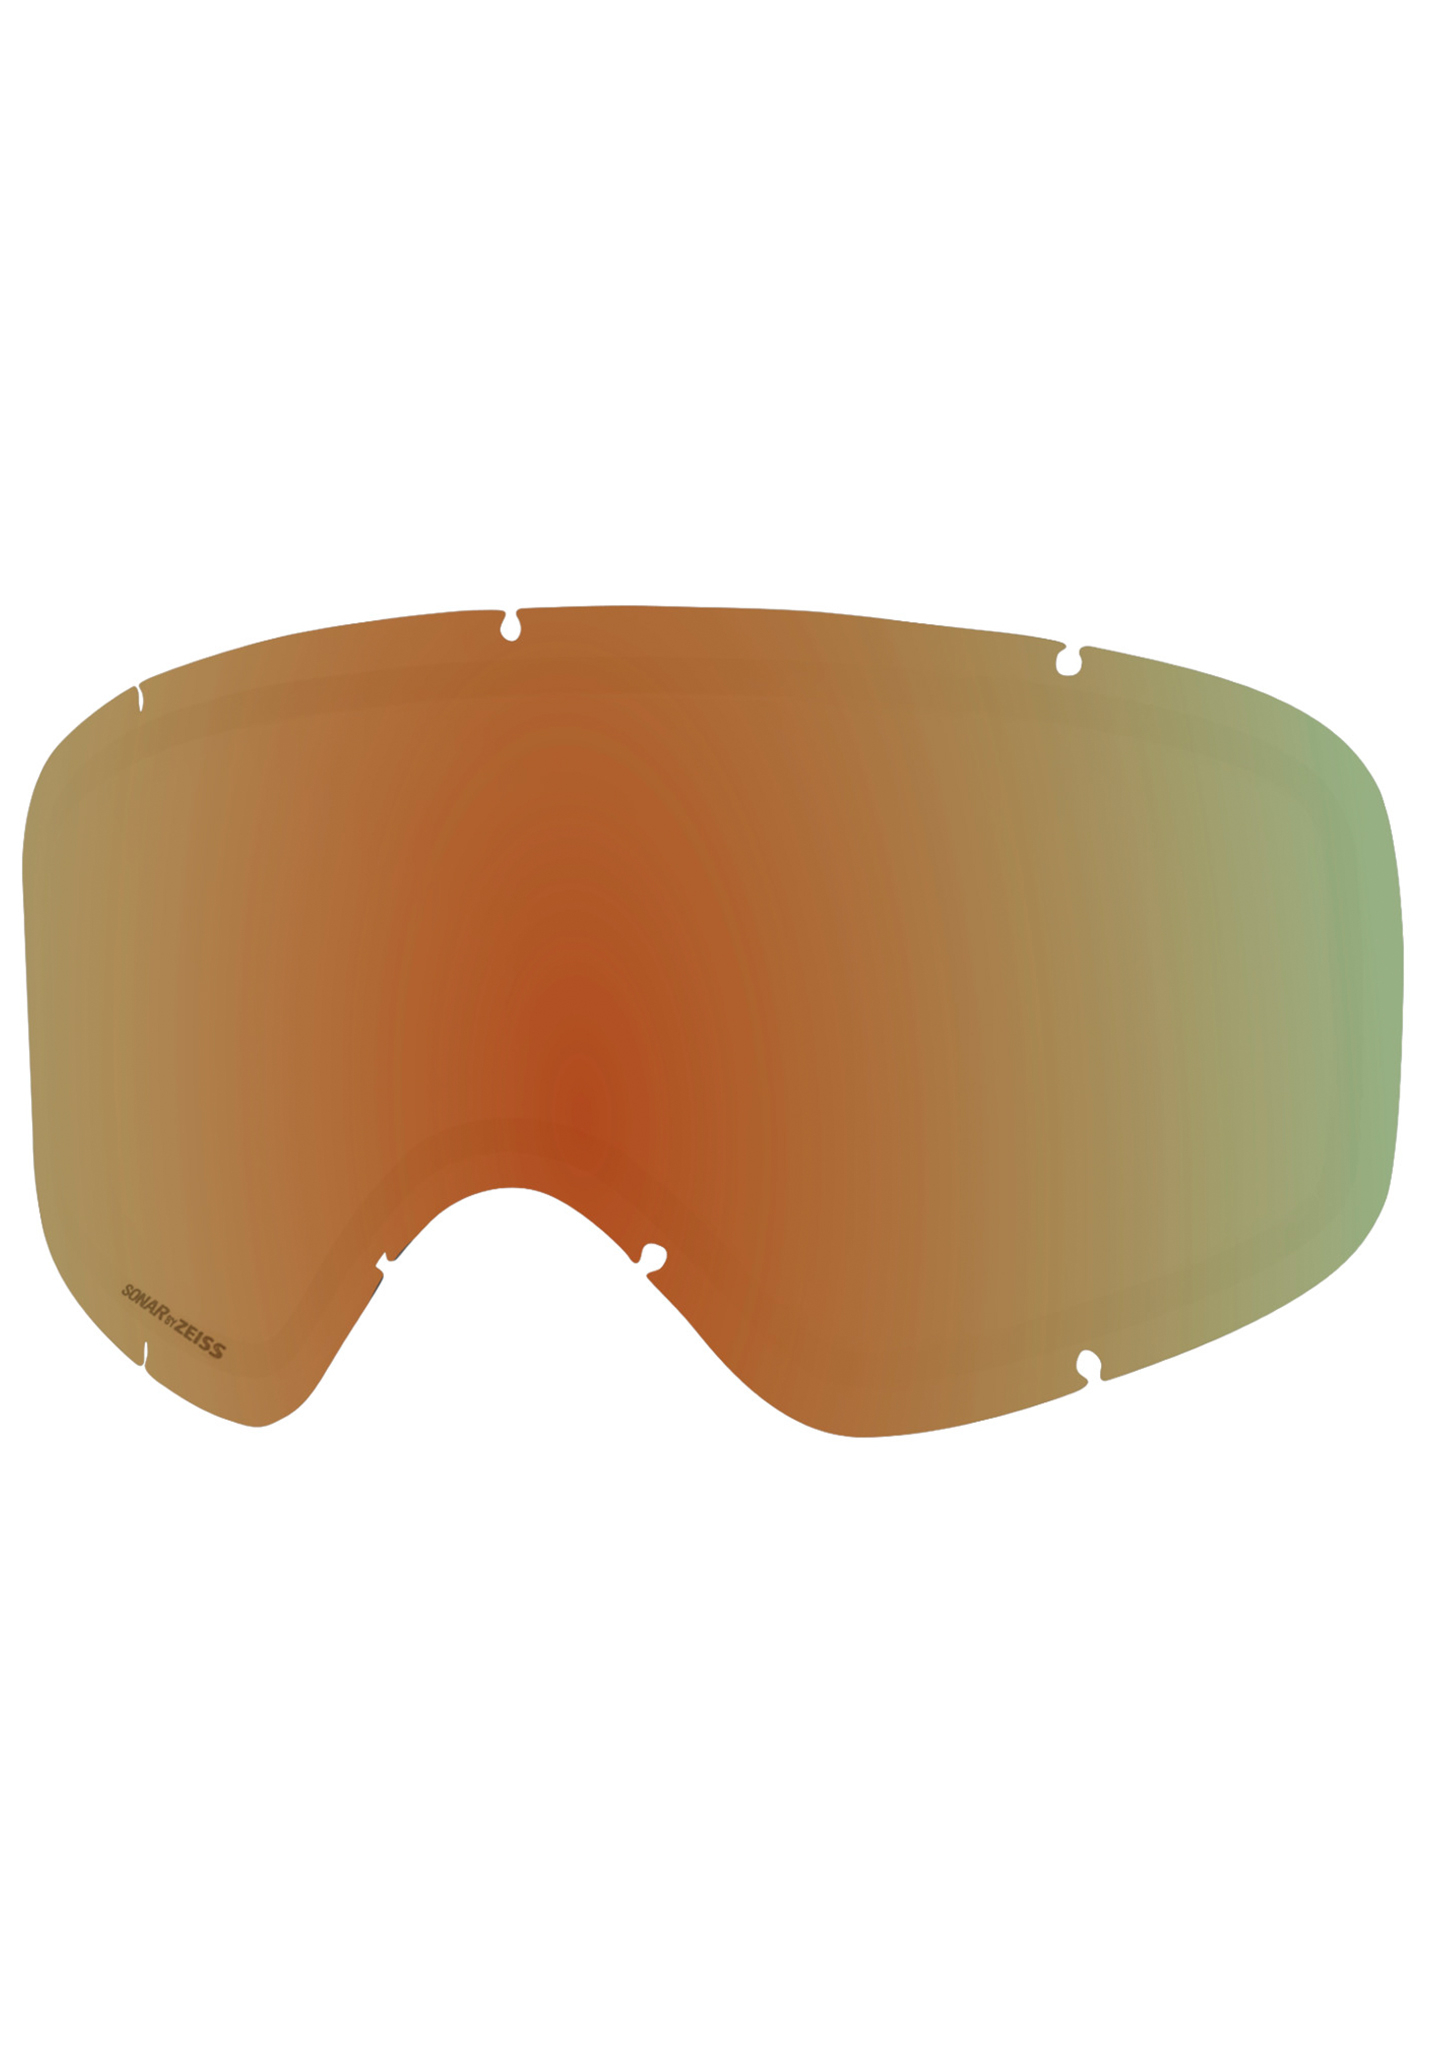 Anon Insight Sonar Lens Snowboardbrillen Ersatzgläser sonarnacht One Size